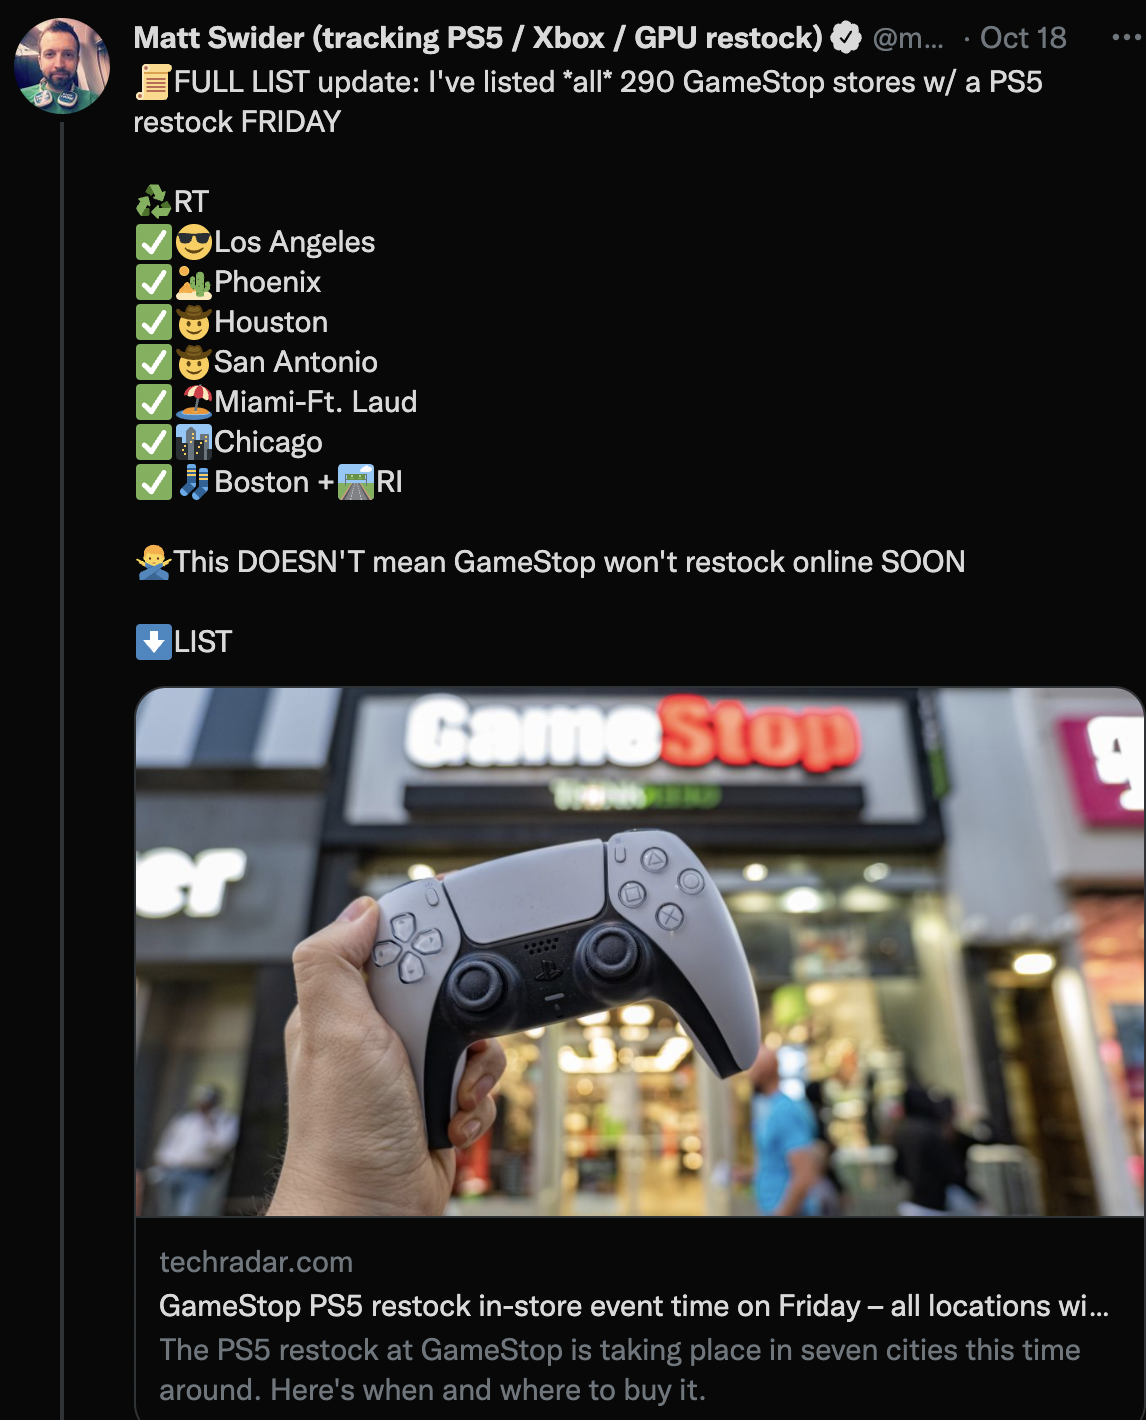 PS5 restock GameStop store with DualSense controller